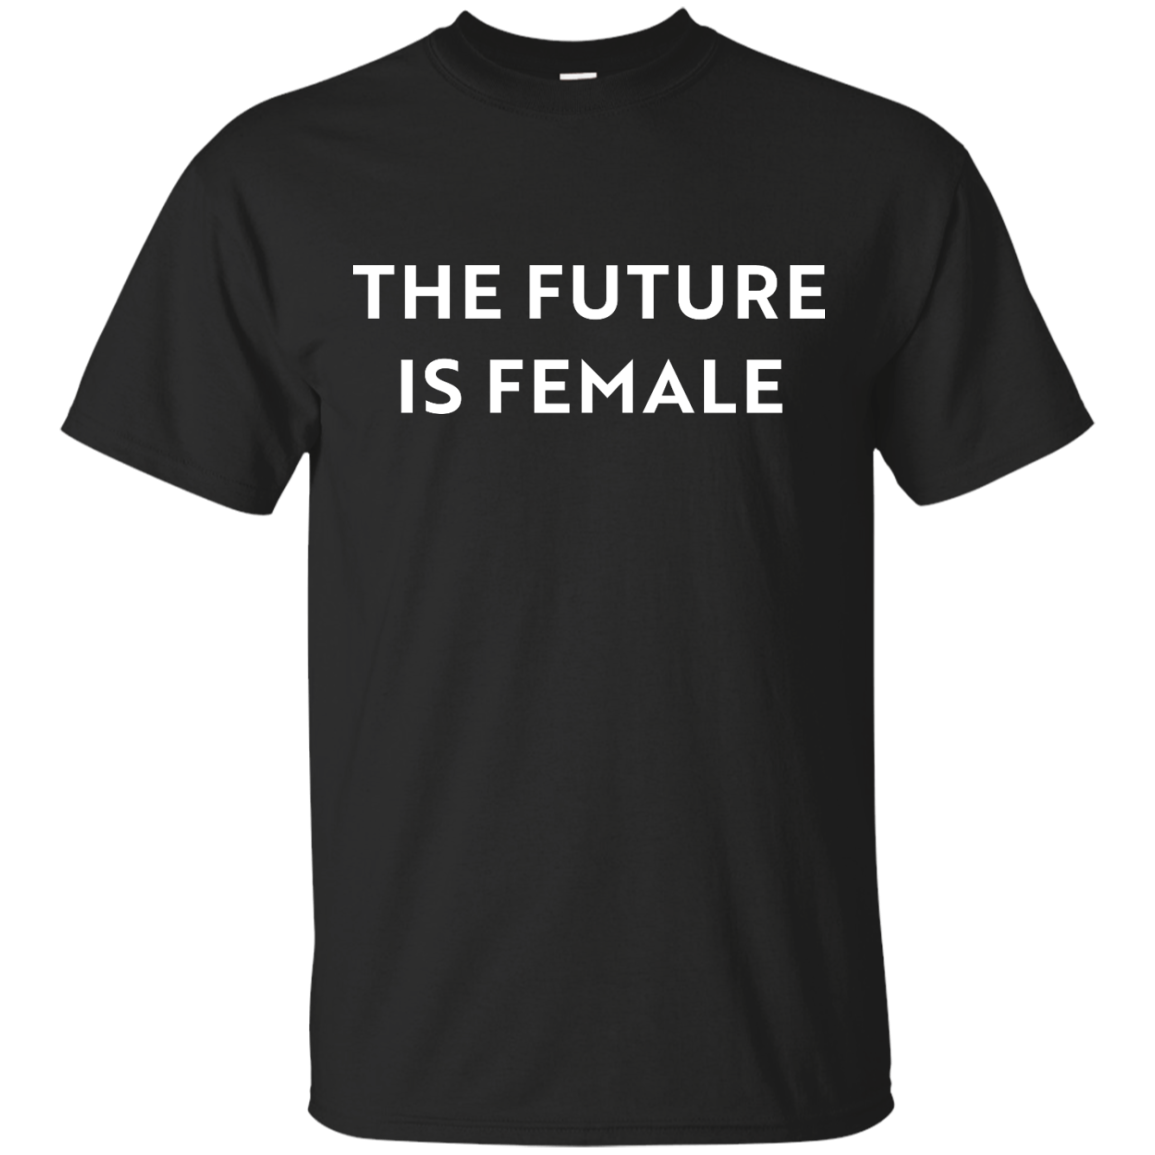 The Future is Female shirt, sweatshirt, racerback tank